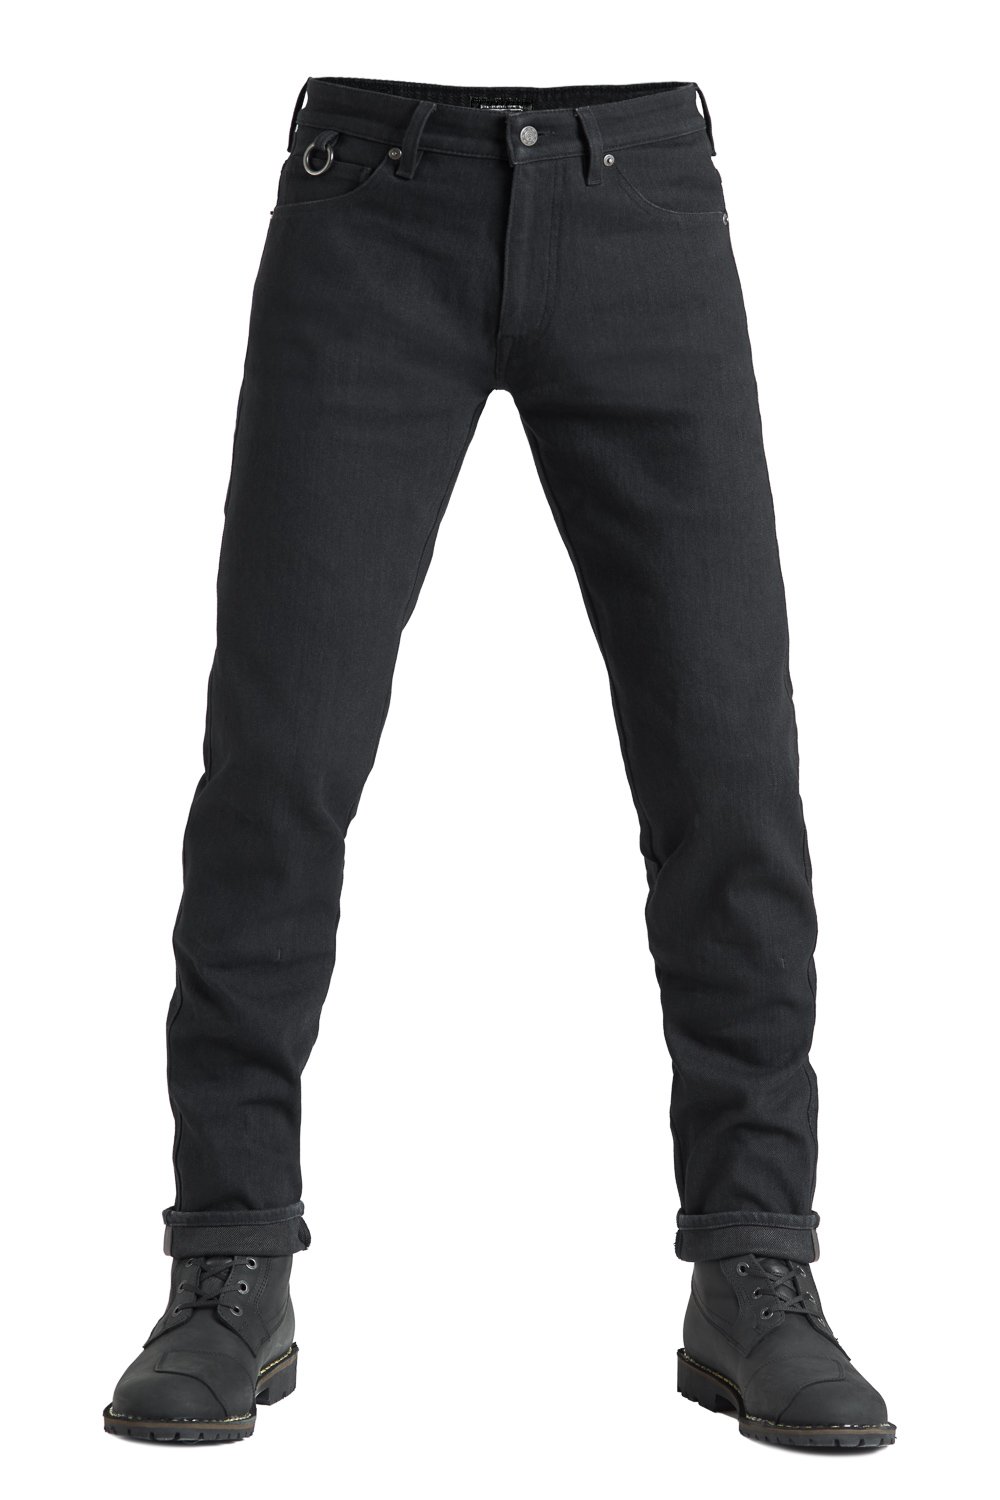 Image of Pando Moto Steel Noir 02 Slim Fit Dyneema® Pantalon Taille W31/L34